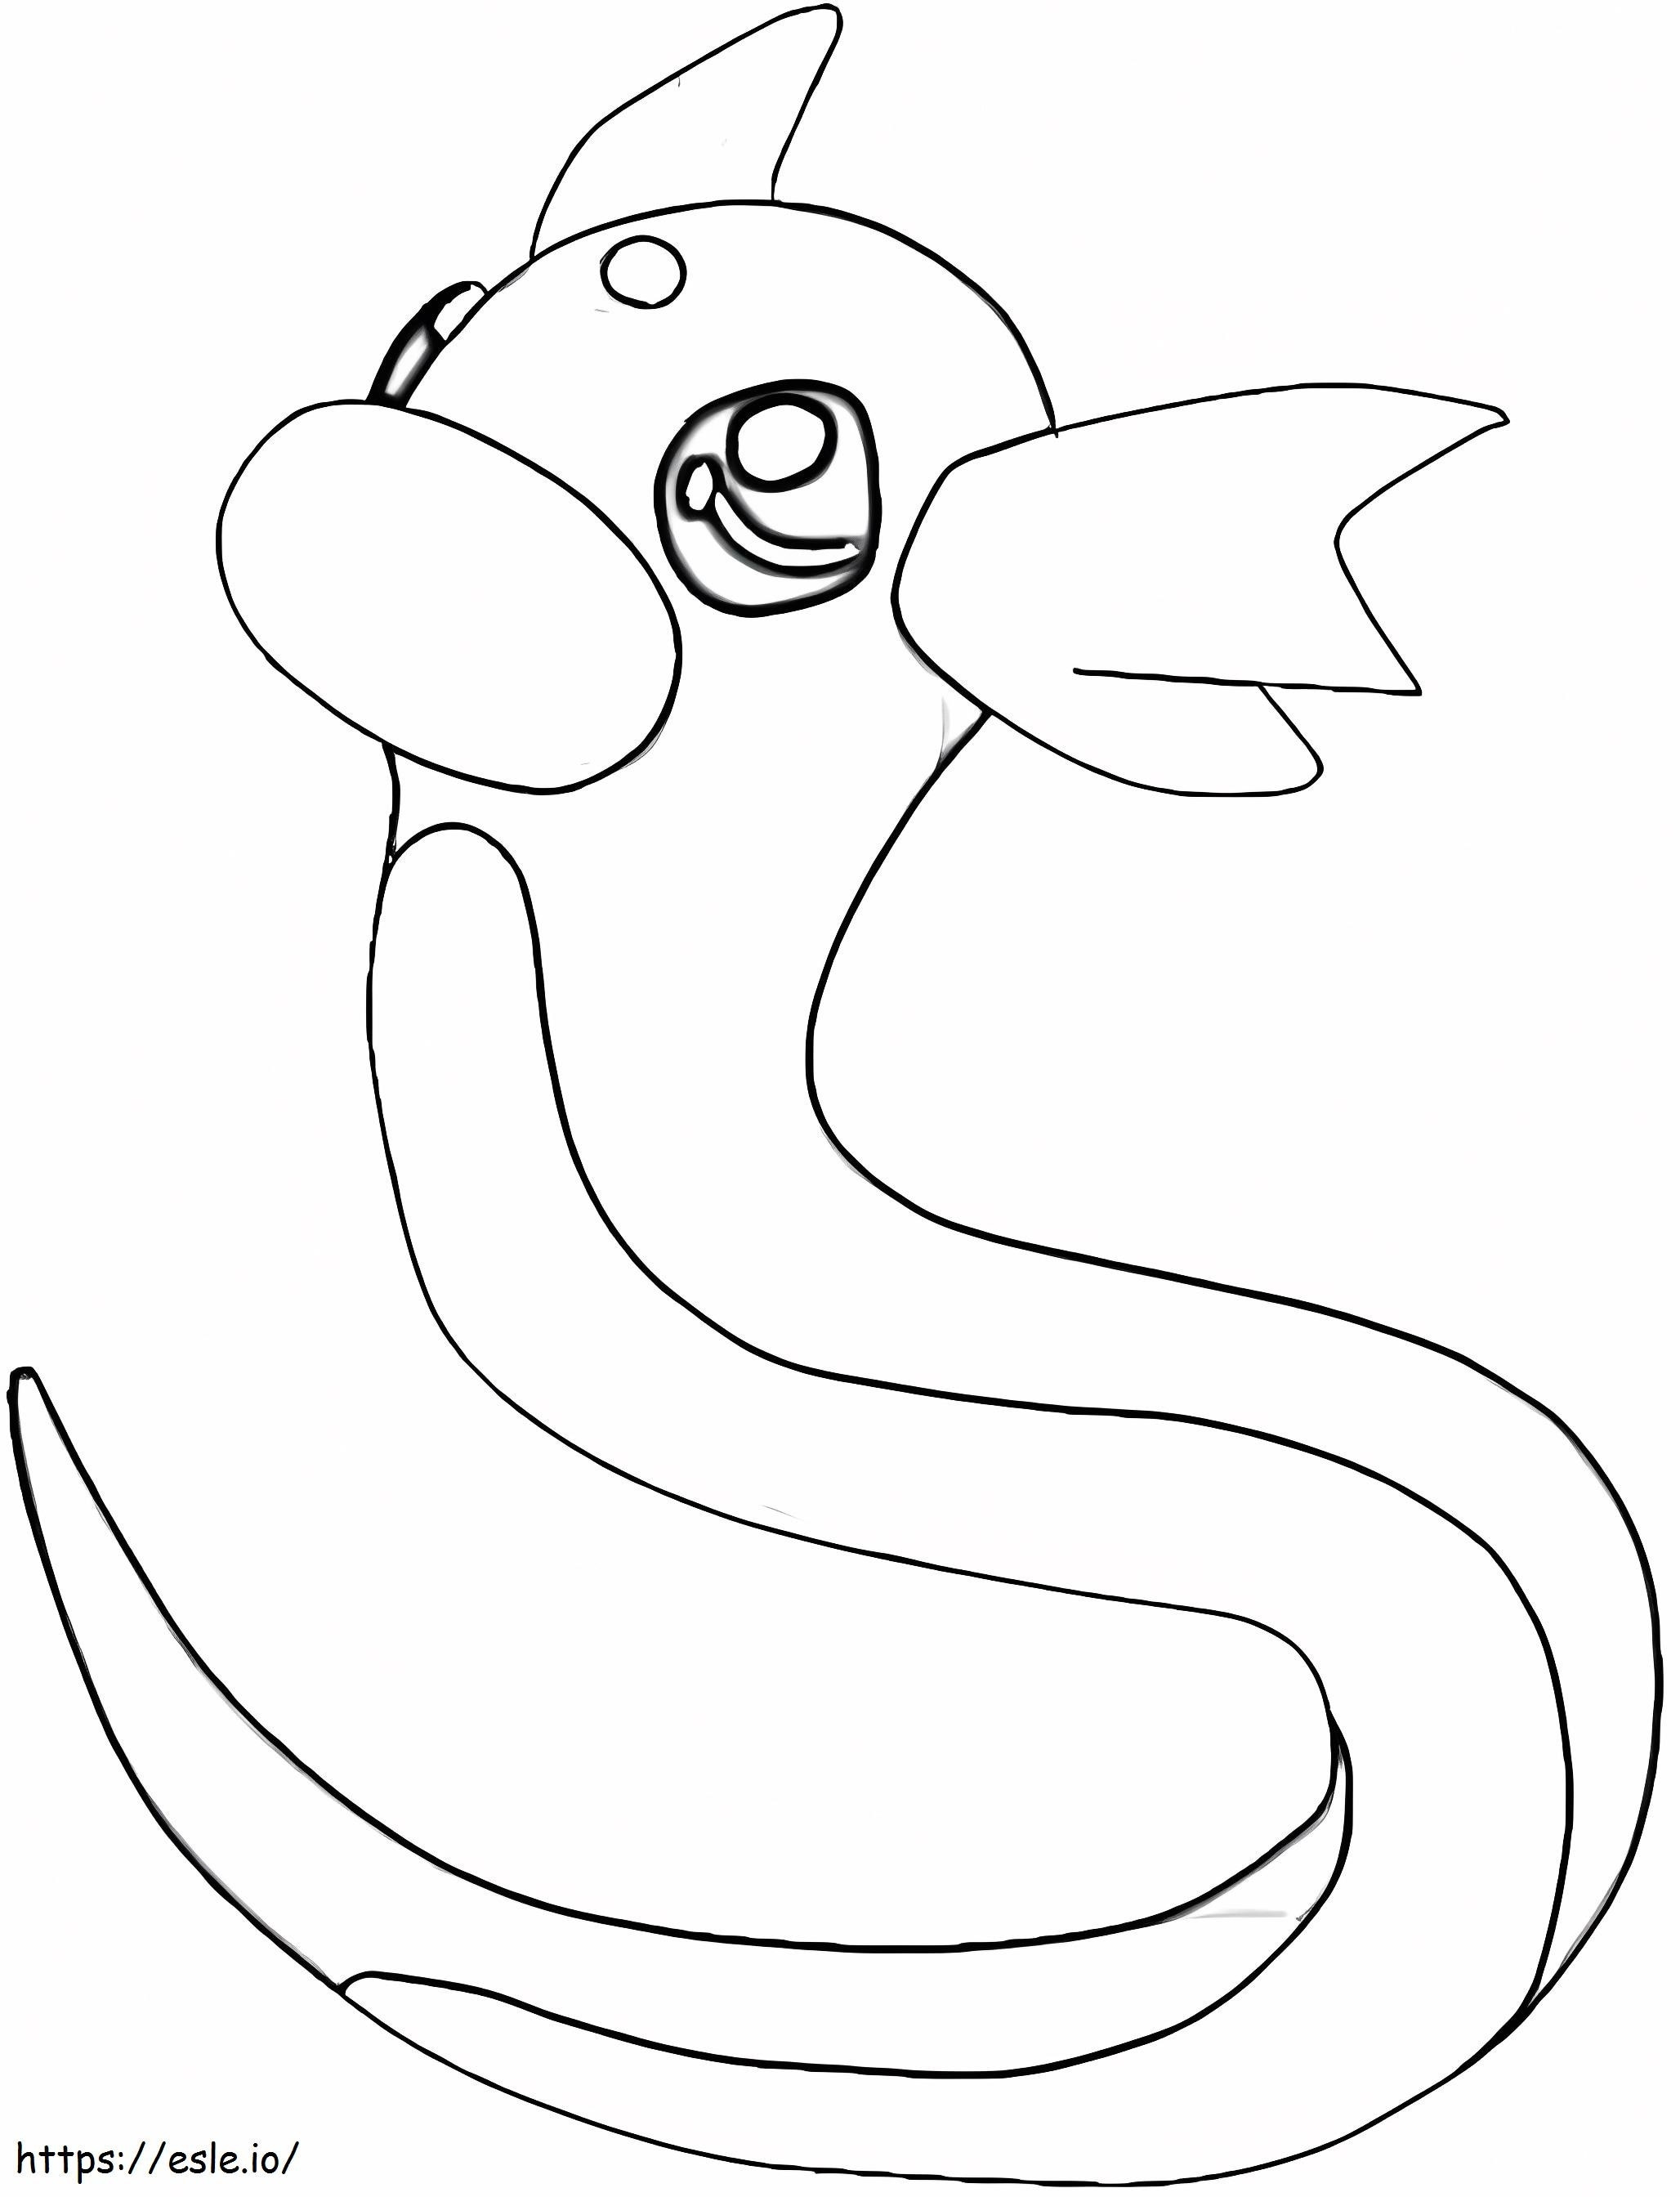 Coloriage Pokémon Dratini 2 à imprimer dessin